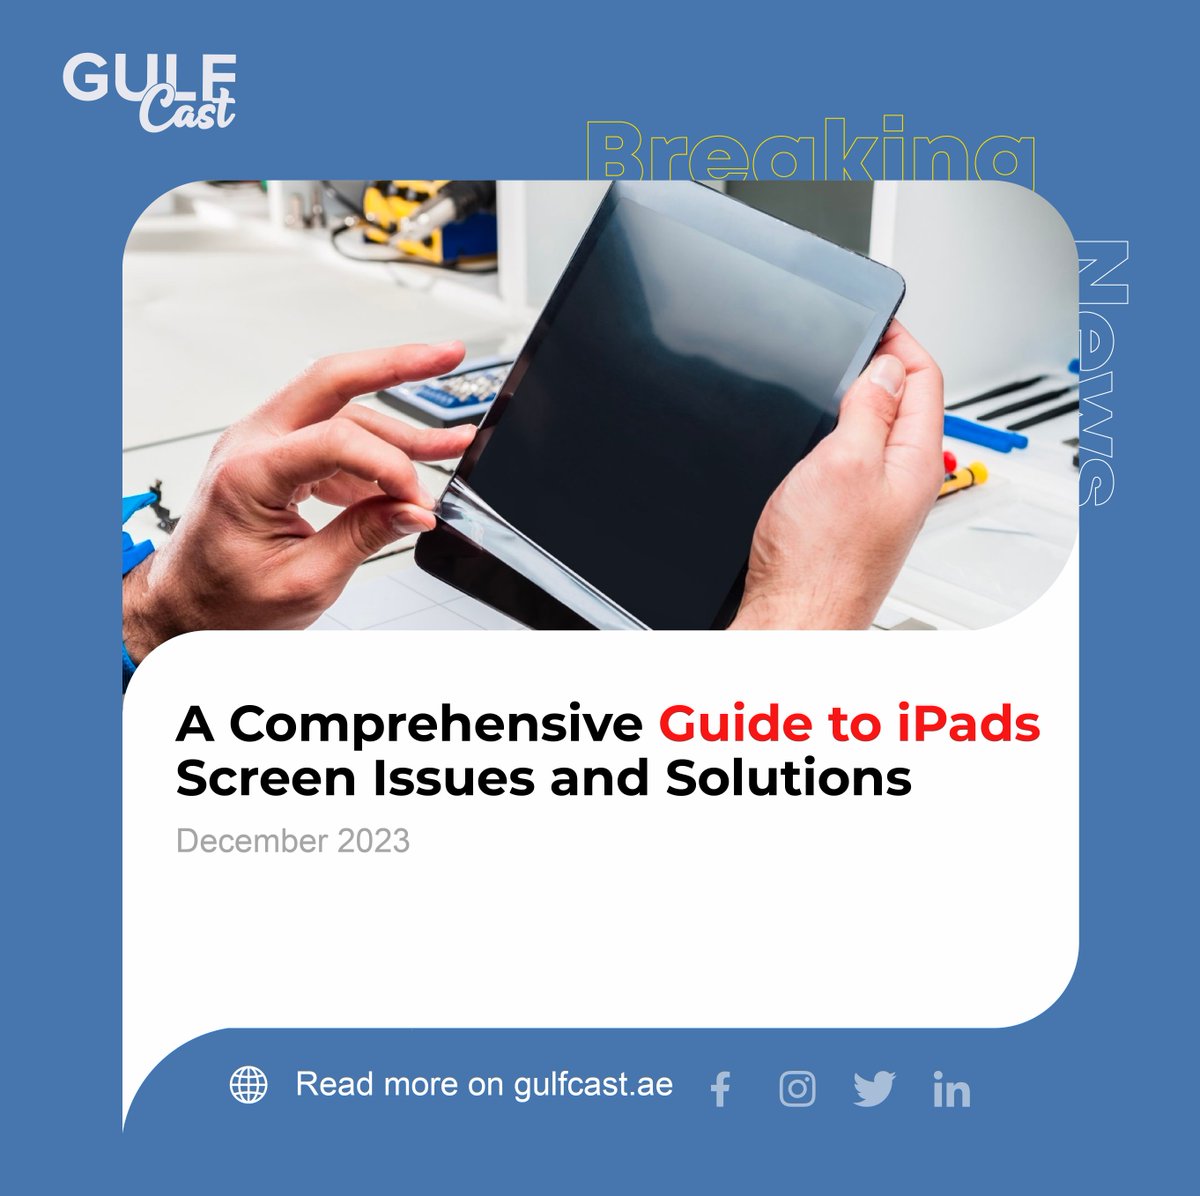 📱 Discover the Ultimate iPad Repair Guide! From troubleshooting common issues to DIY screen repair, navigating repair services in Dubai.
Explore: buff.ly/3Nx9OAl
#gulfcast #iPadRepair #TechGuide #justrepair #iPads #Tech #uae #dubai #apple #samaung #techlover